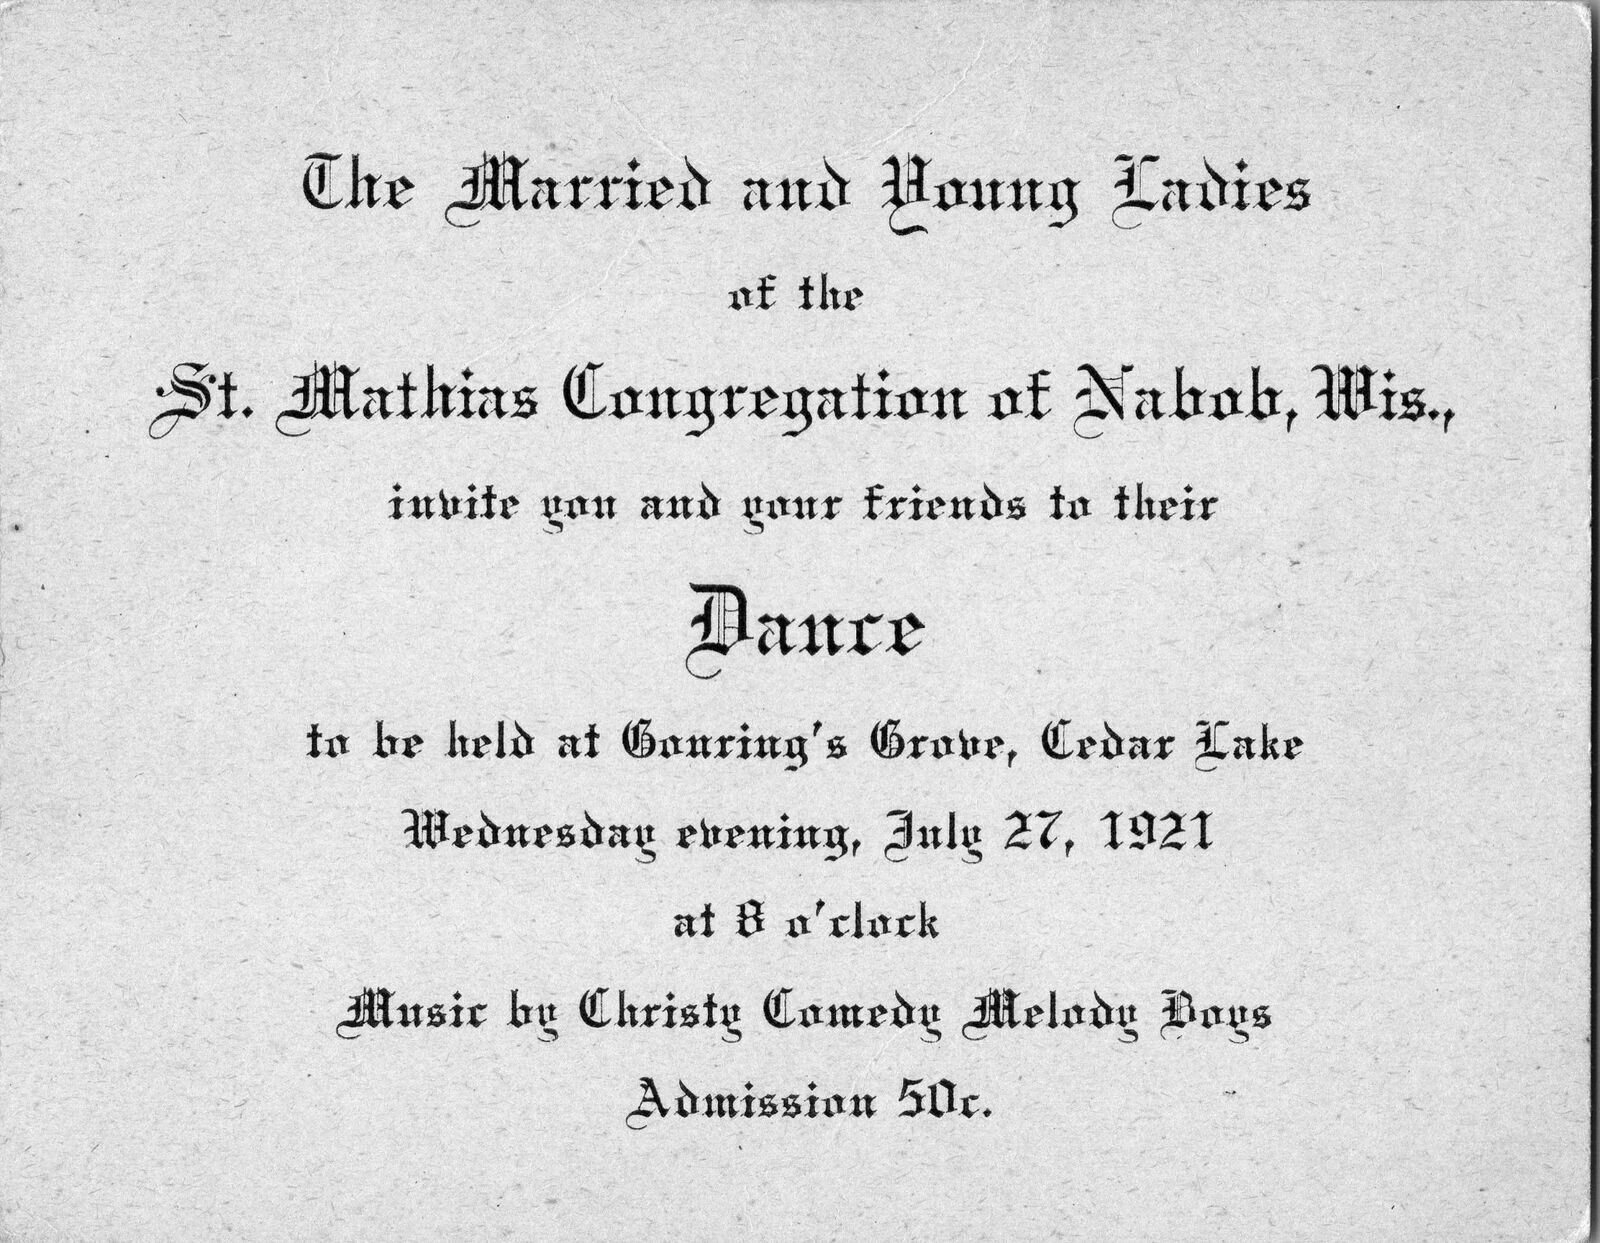 Married & Young Ladies Dance Invite St Mathias Cedar Lake Jul 27,1921 Music Dogs